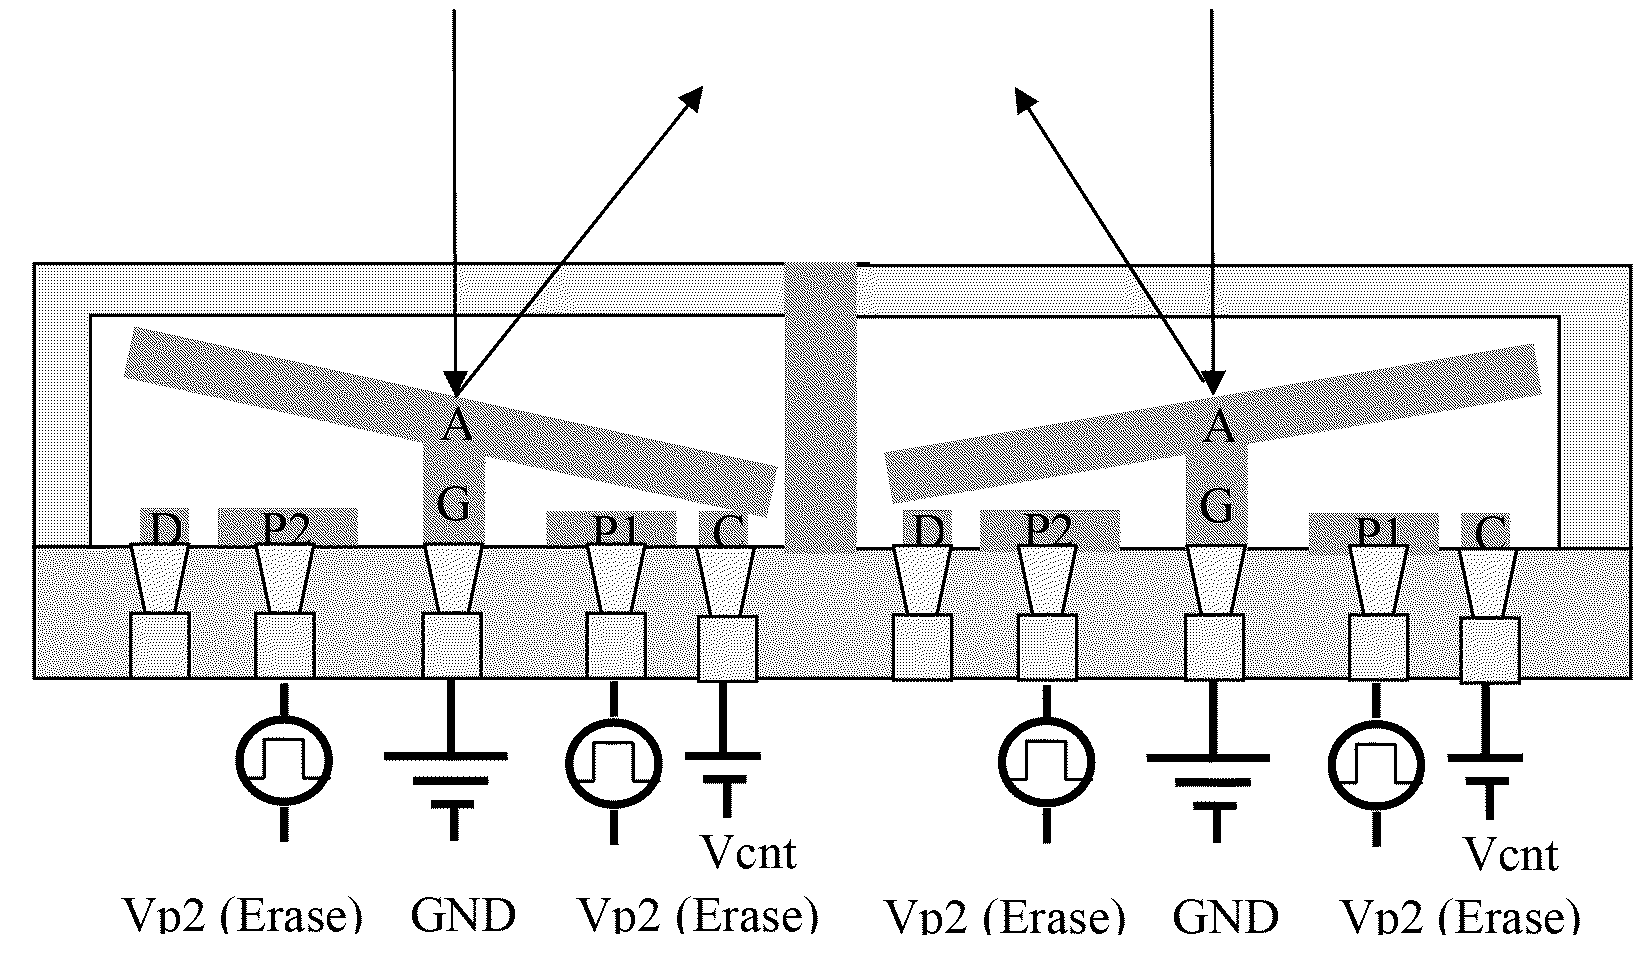 Fabrication of a floating rocker MEMS device for light modulation